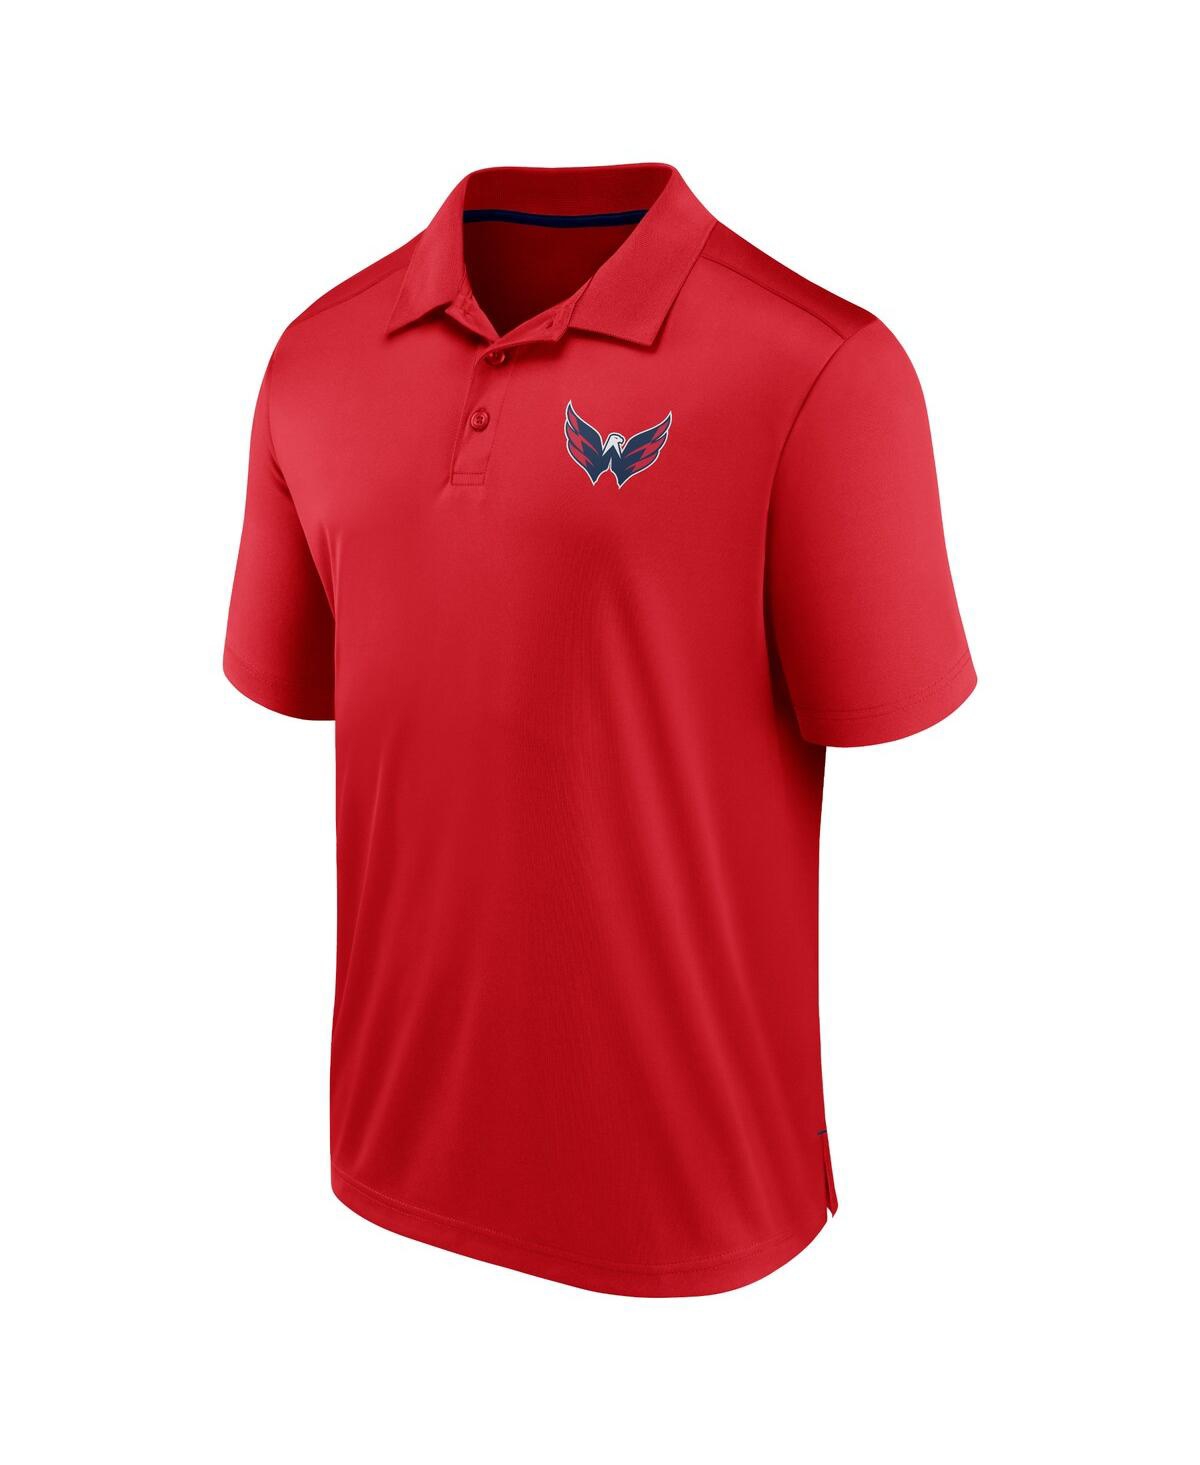 Shop Fanatics Men's  Red Washington Capitals Polo Shirt